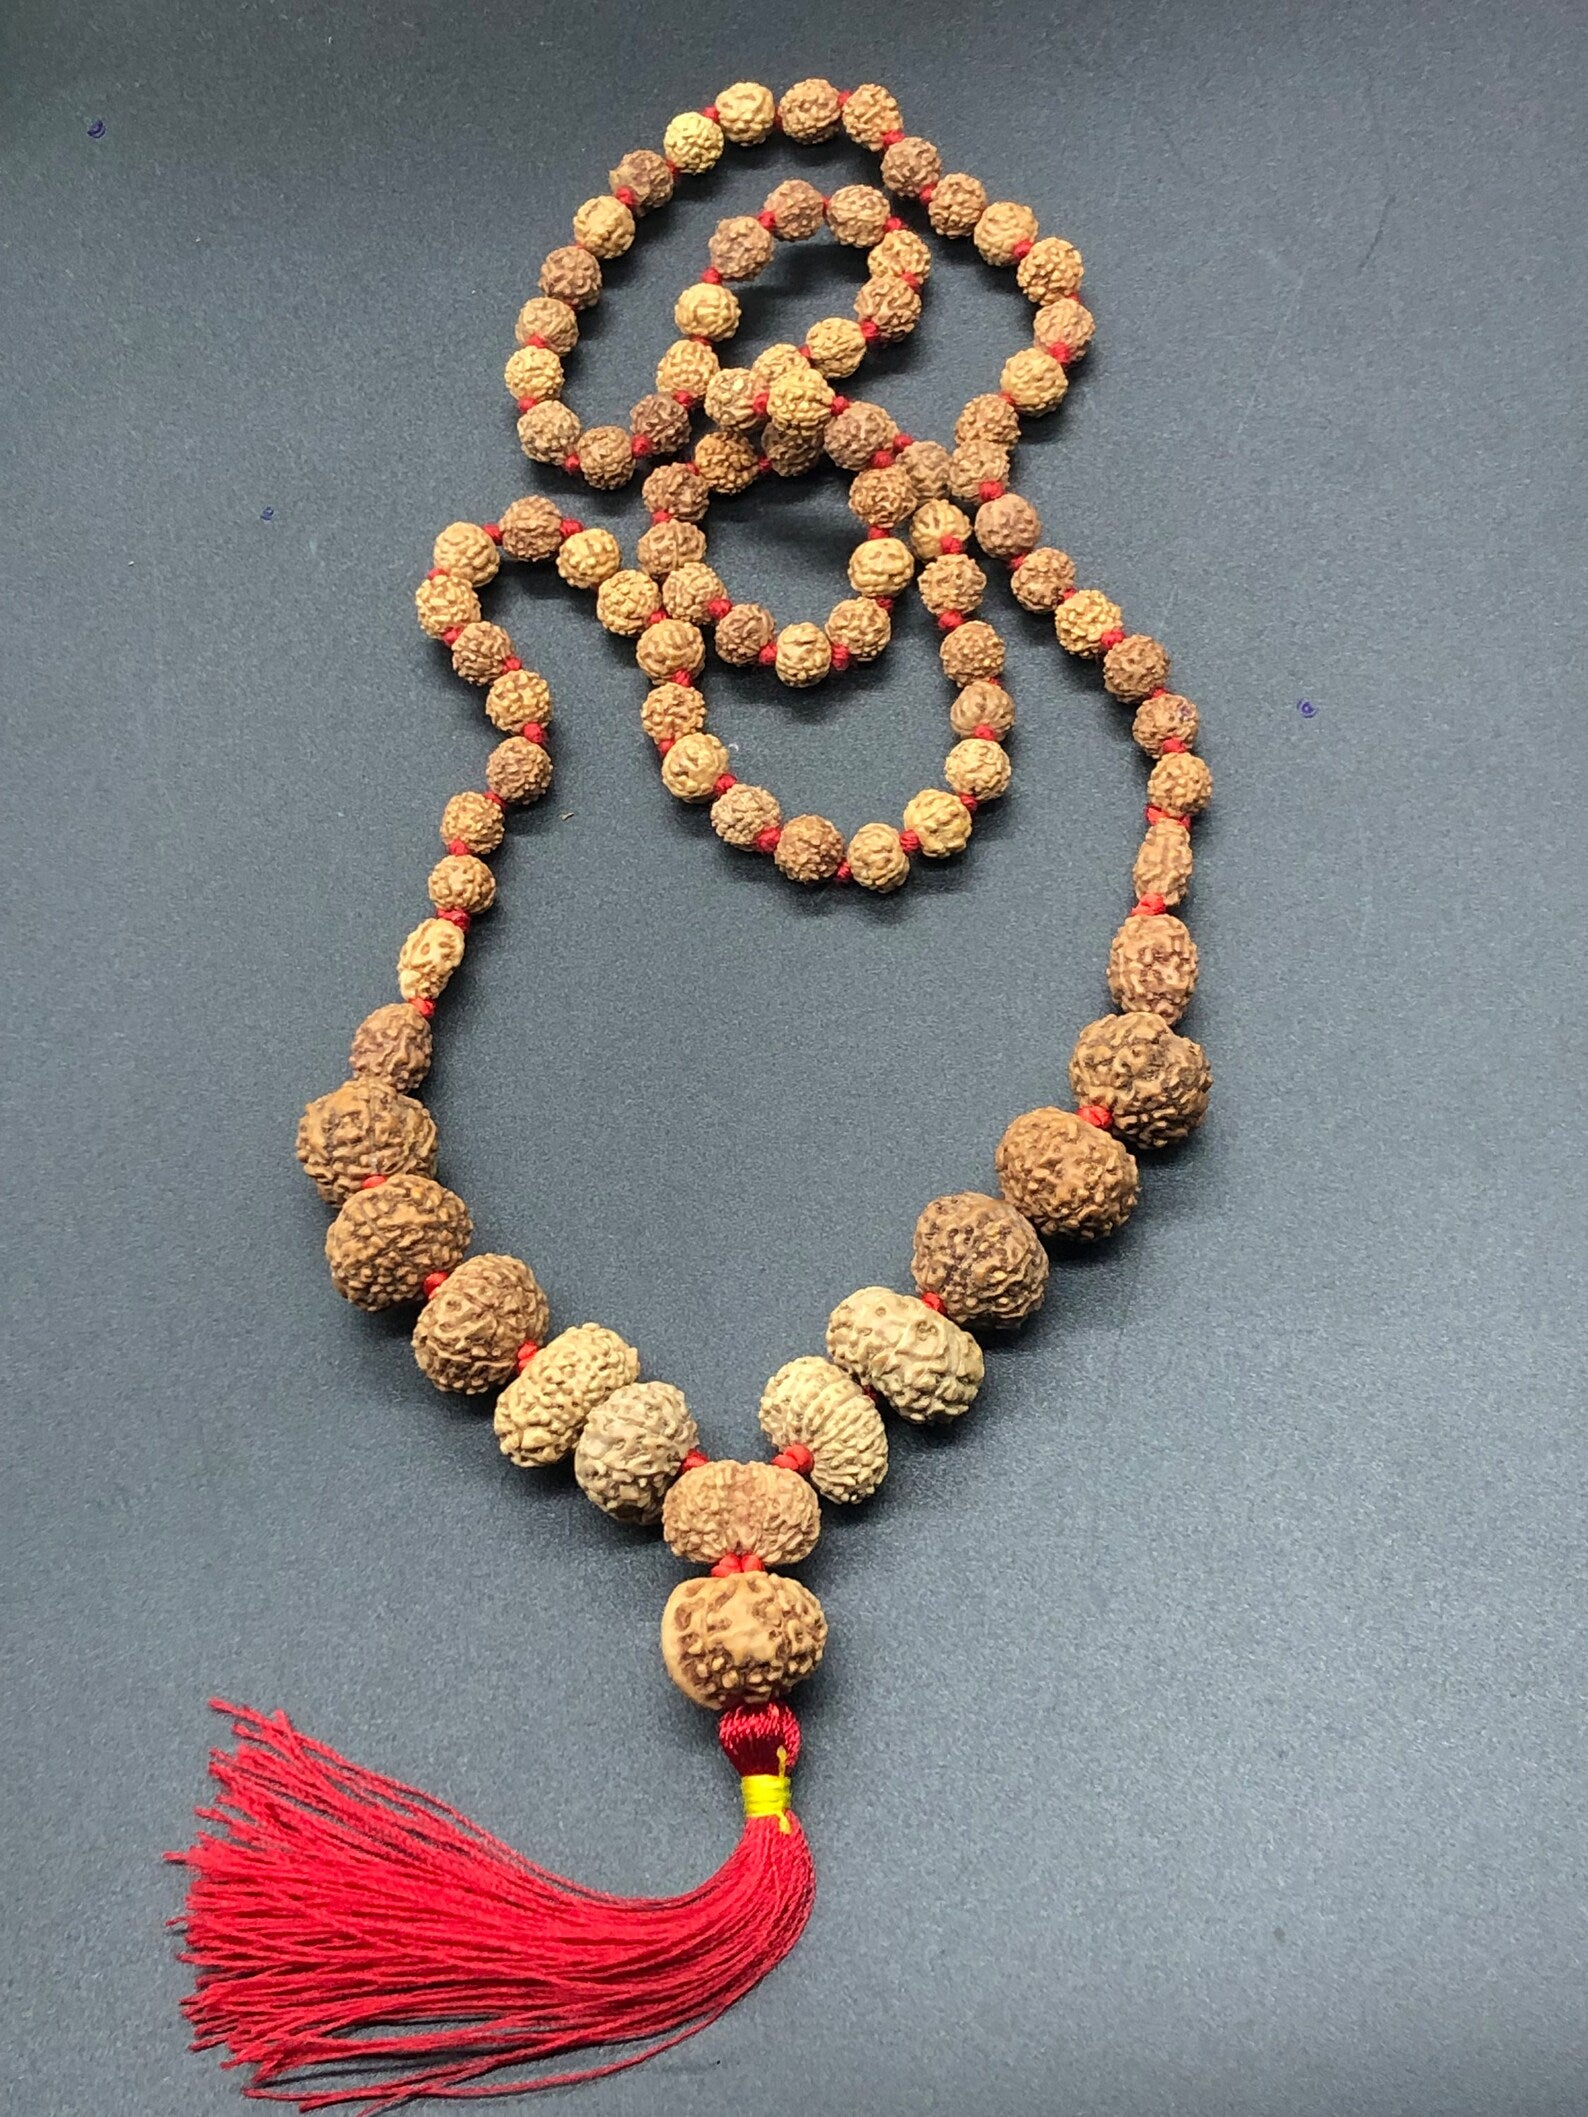 Indonesian Siddha Mala 1-14 Mukhi, Ganesh, Gaurishankar Medium Size 14mm-17mm With Lab Certificate Original Beads - Rudra Charms